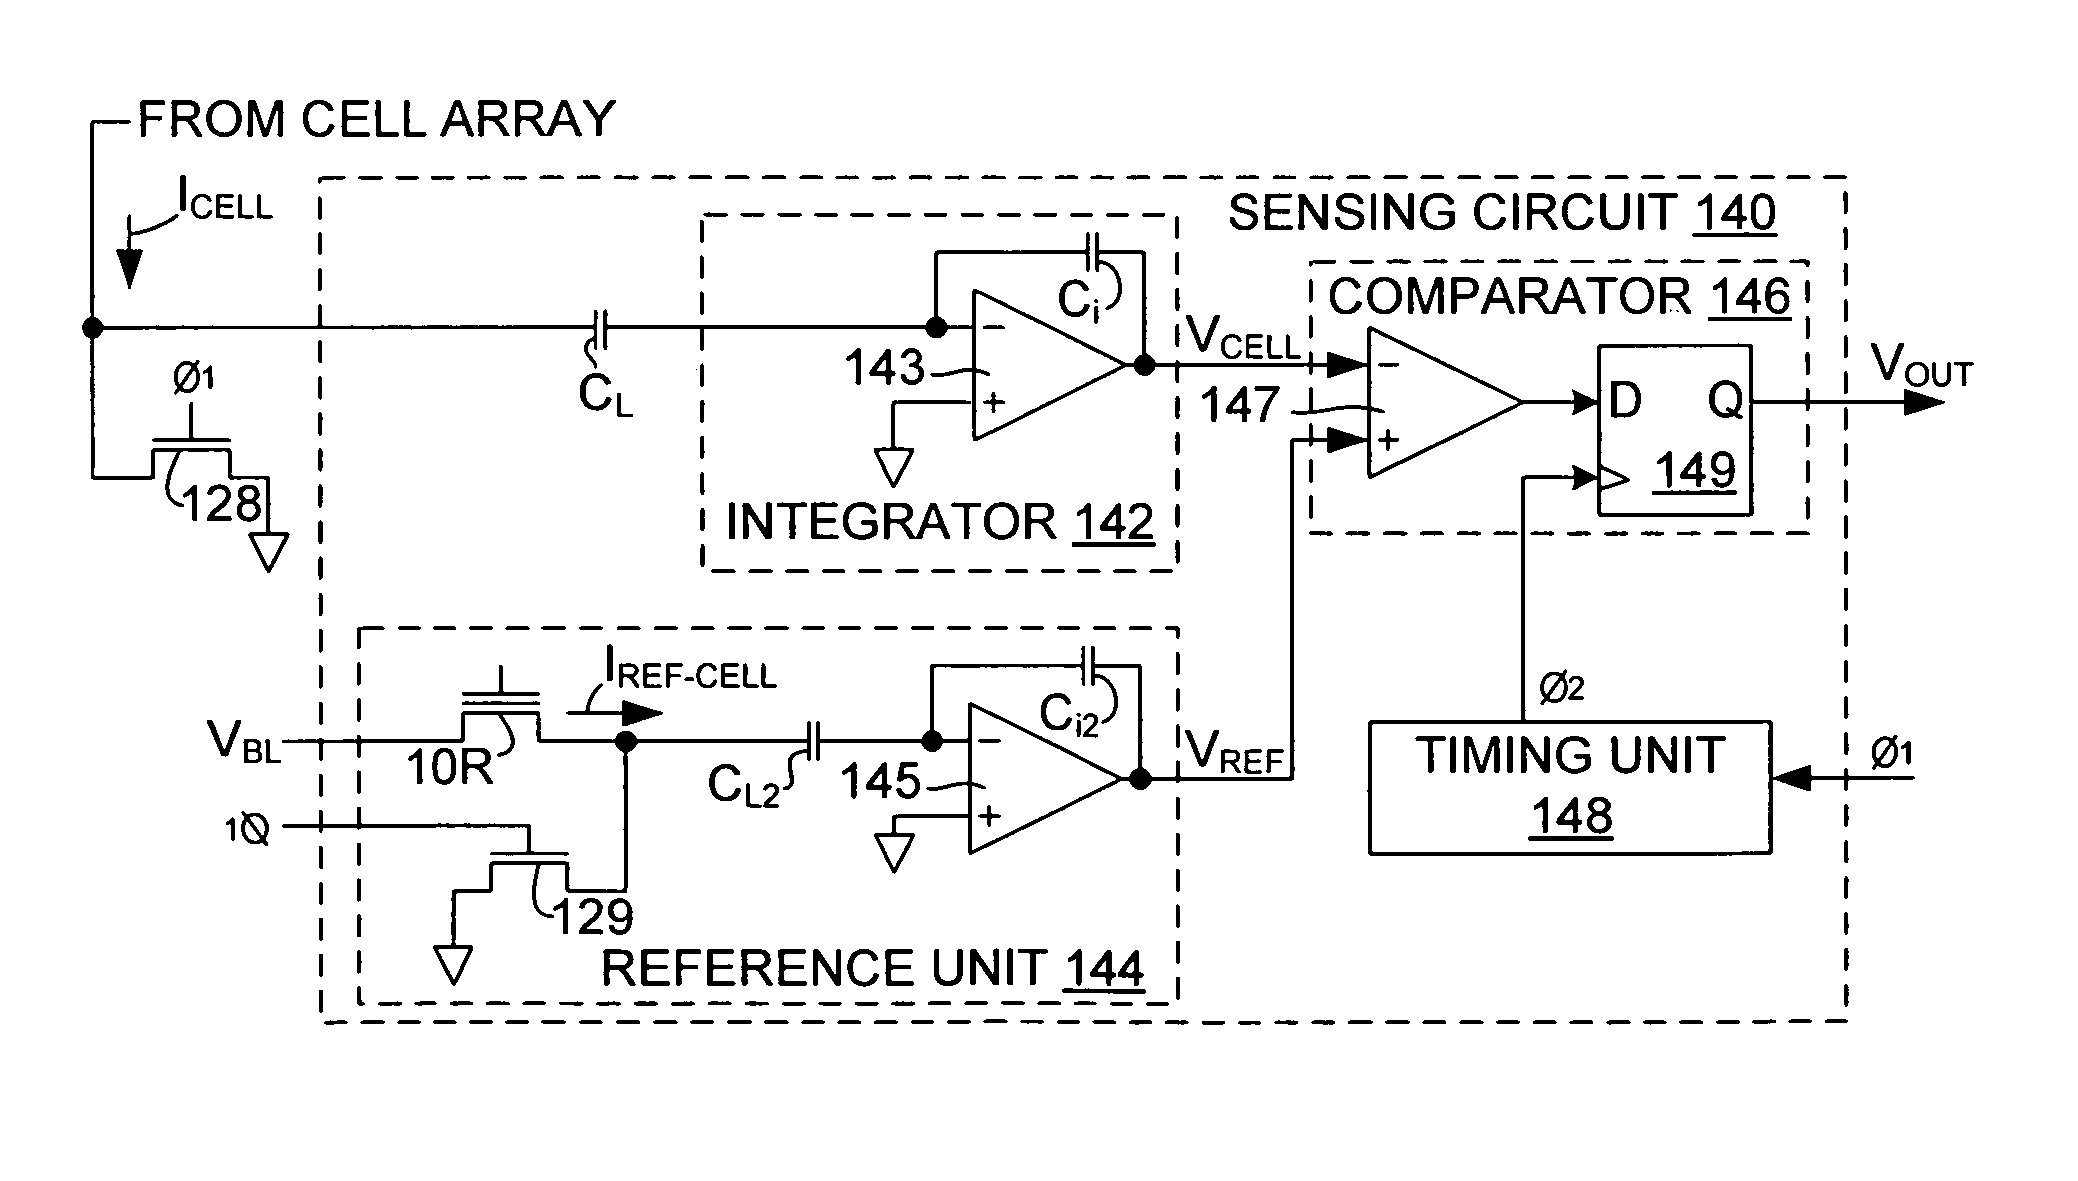 Integrator-based current sensing circuit for reading memory cells